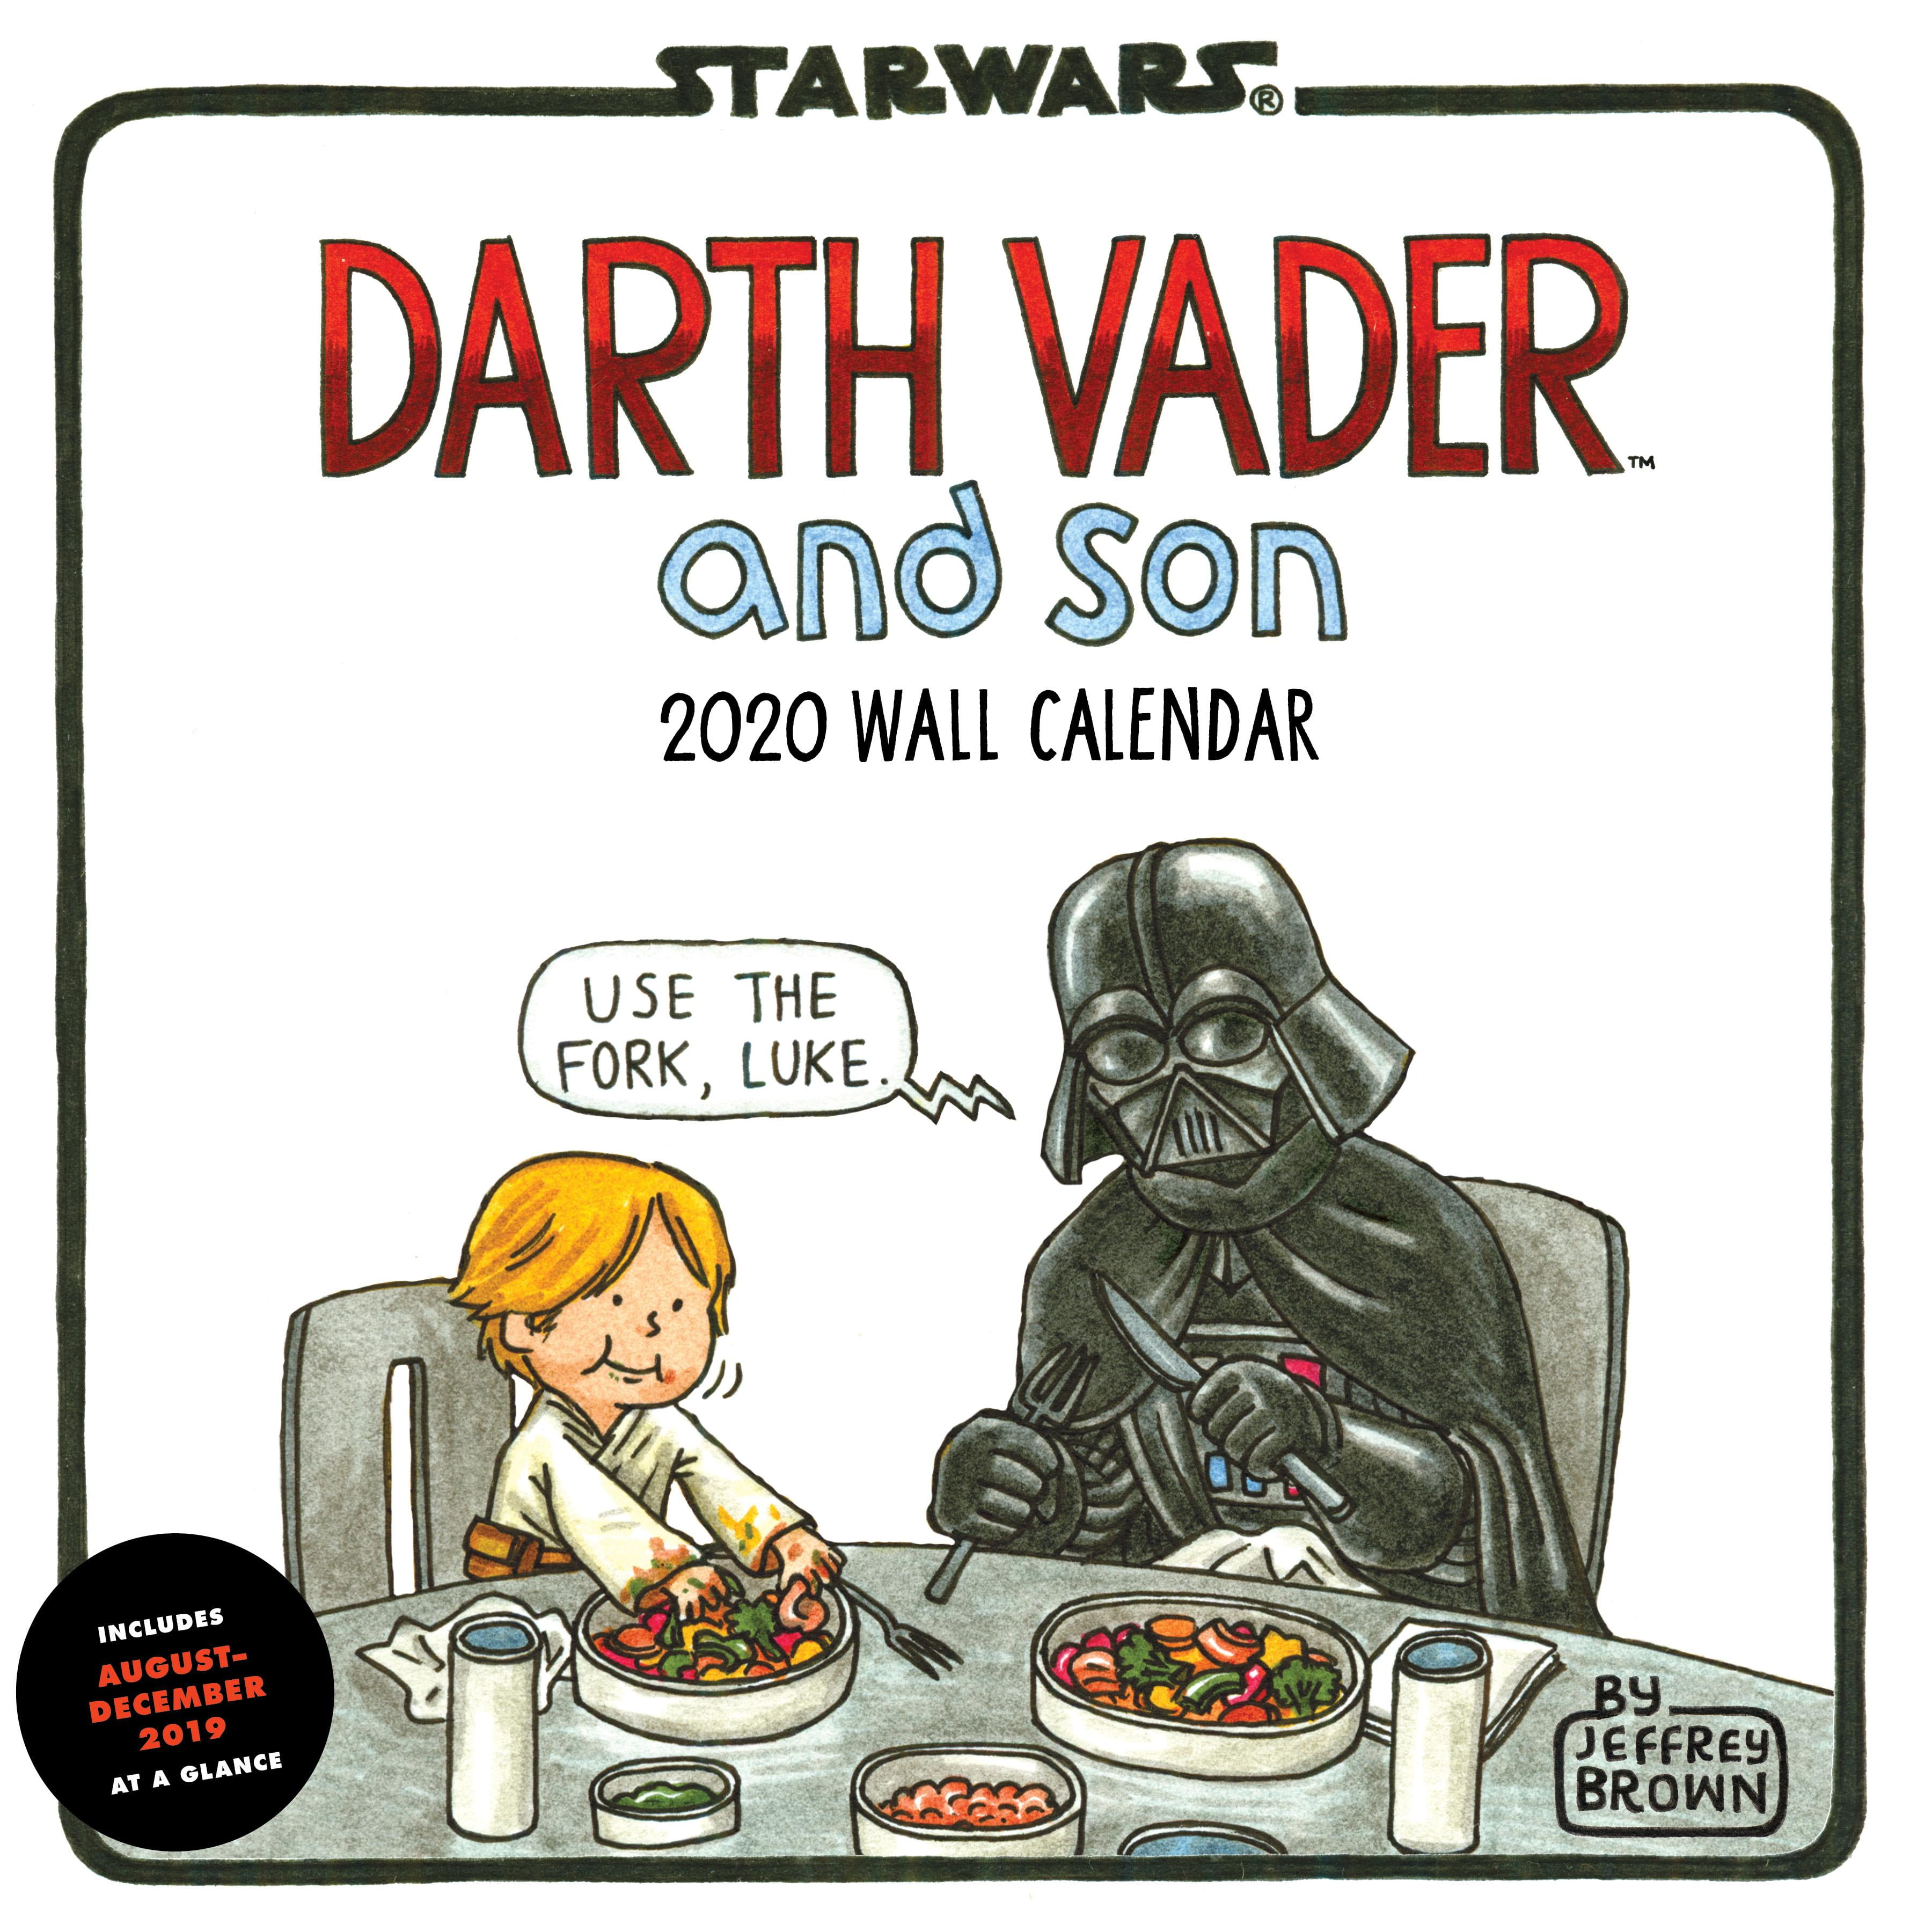 darth-vader-and-son-2020-wall-calendar-2020-wall-calendar-star-wars